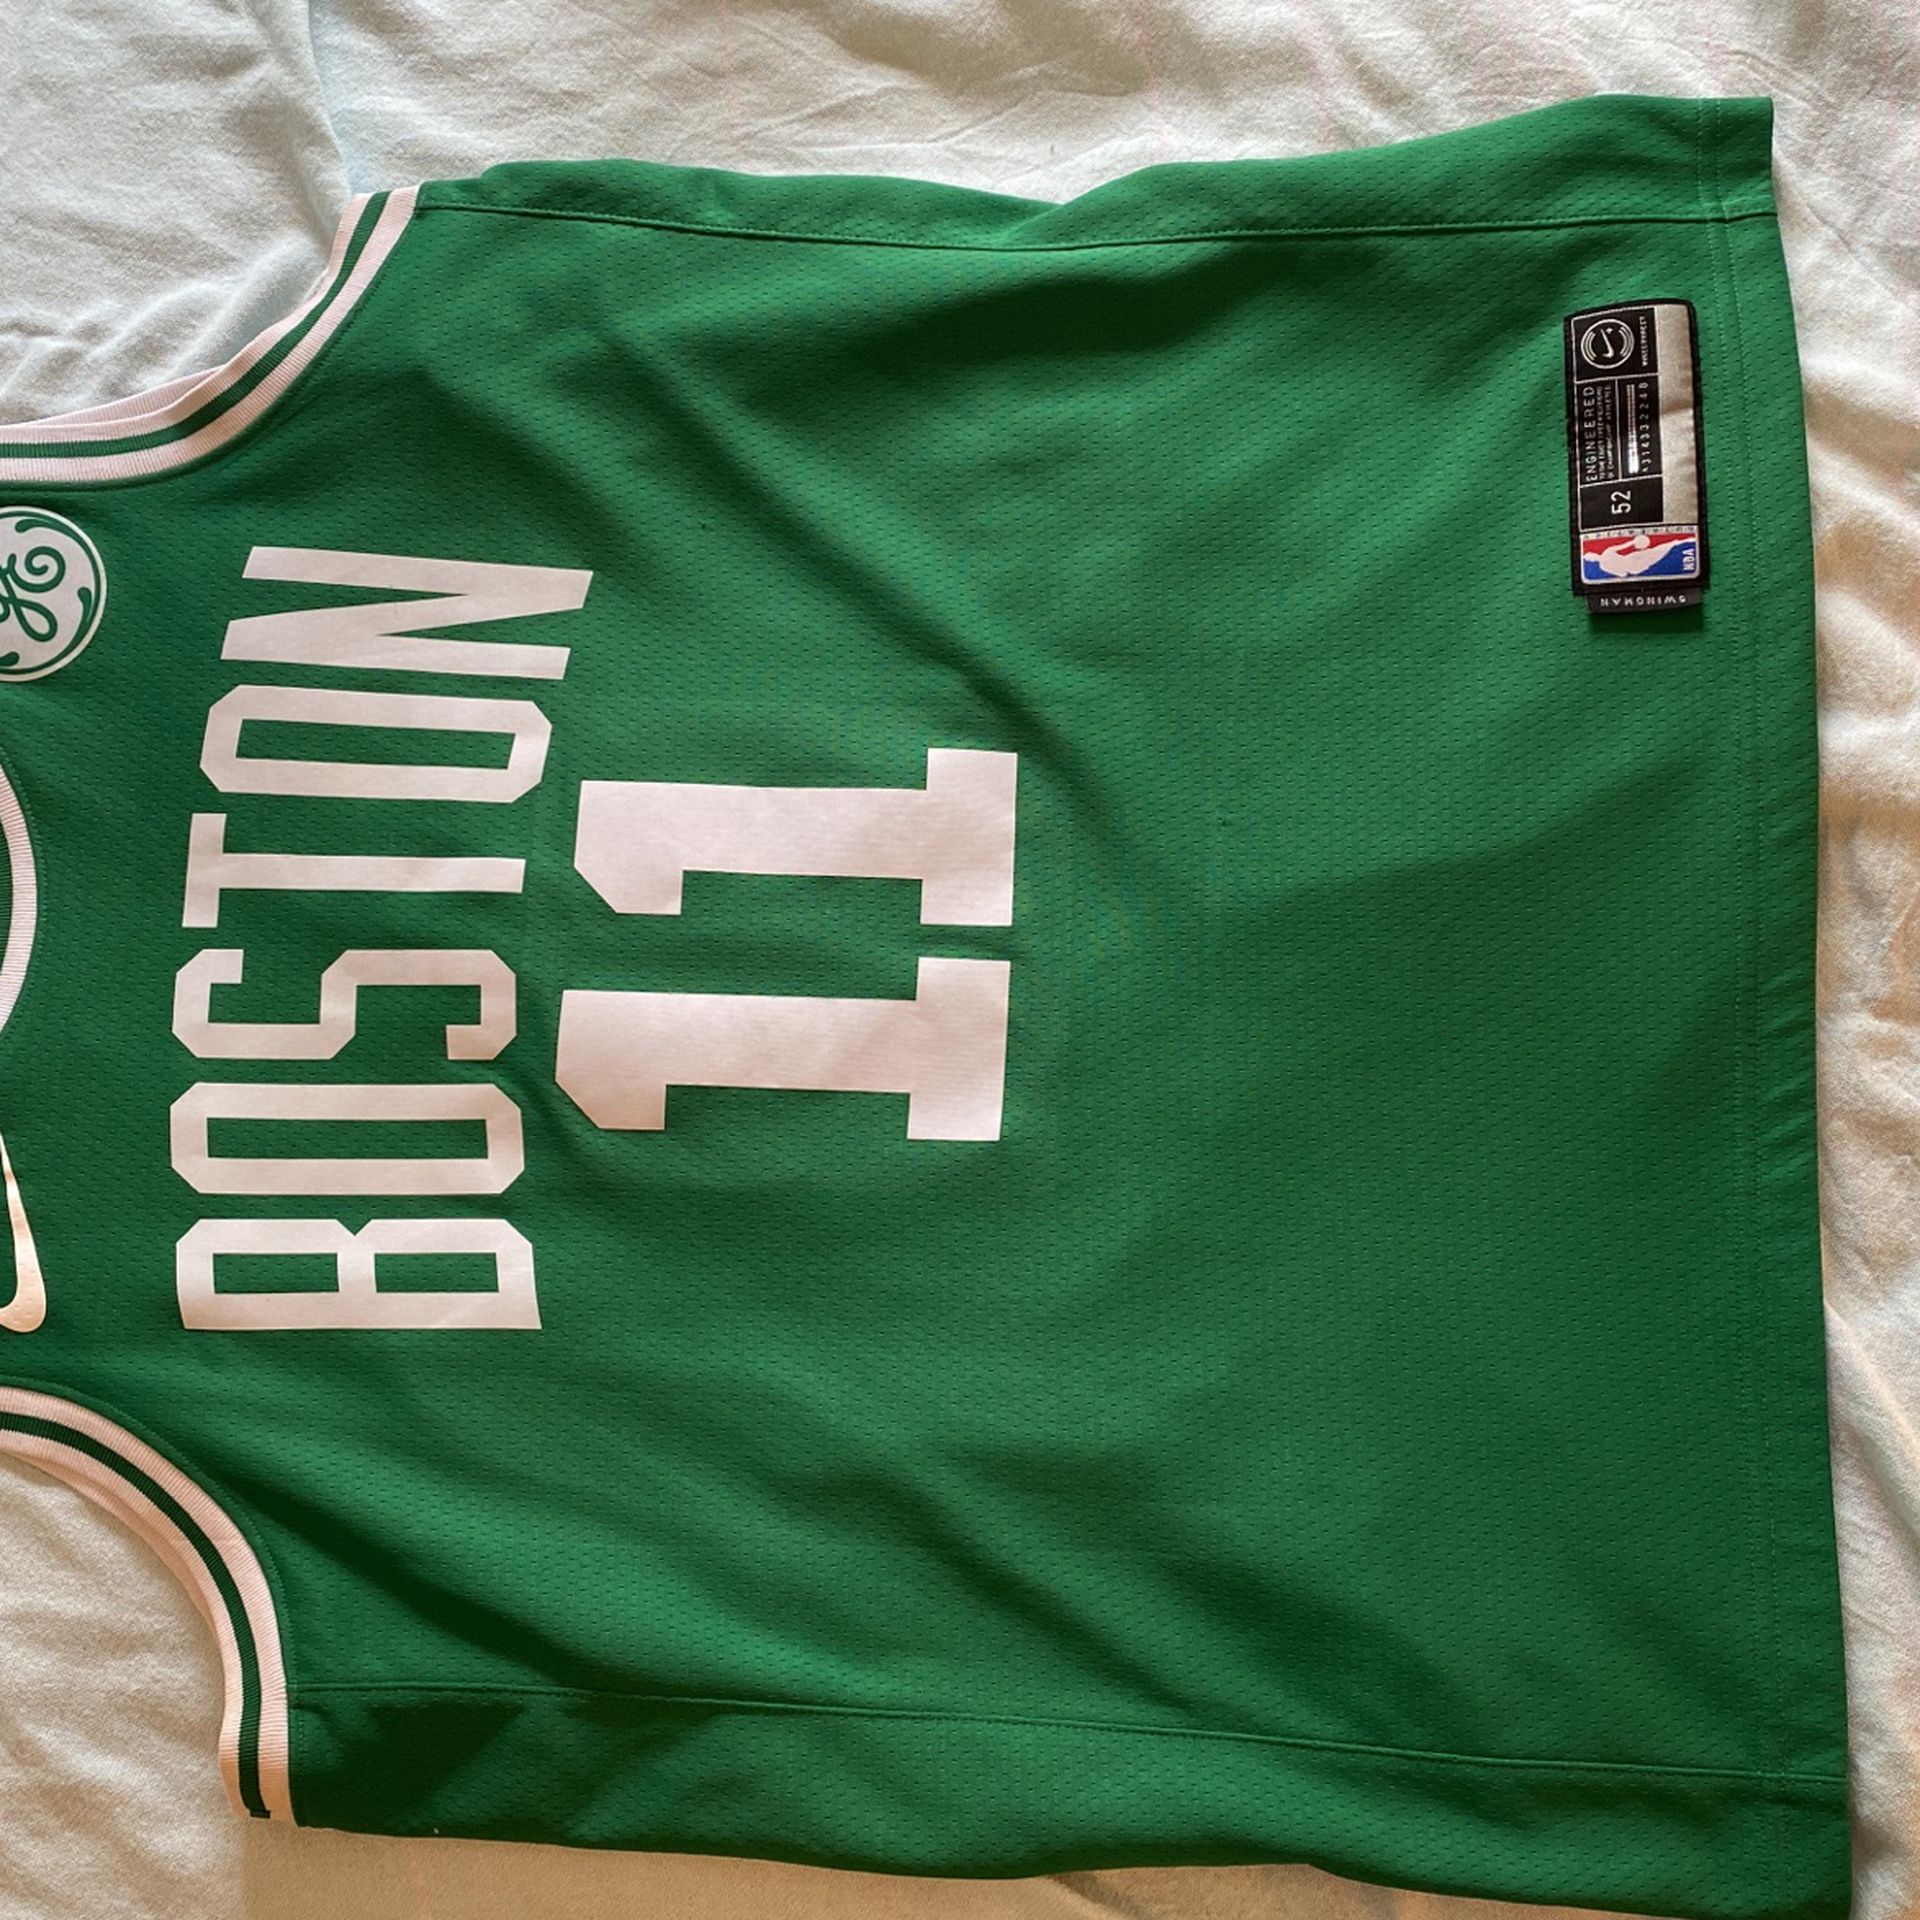 Kyrie Irving Celtics Jersey XL